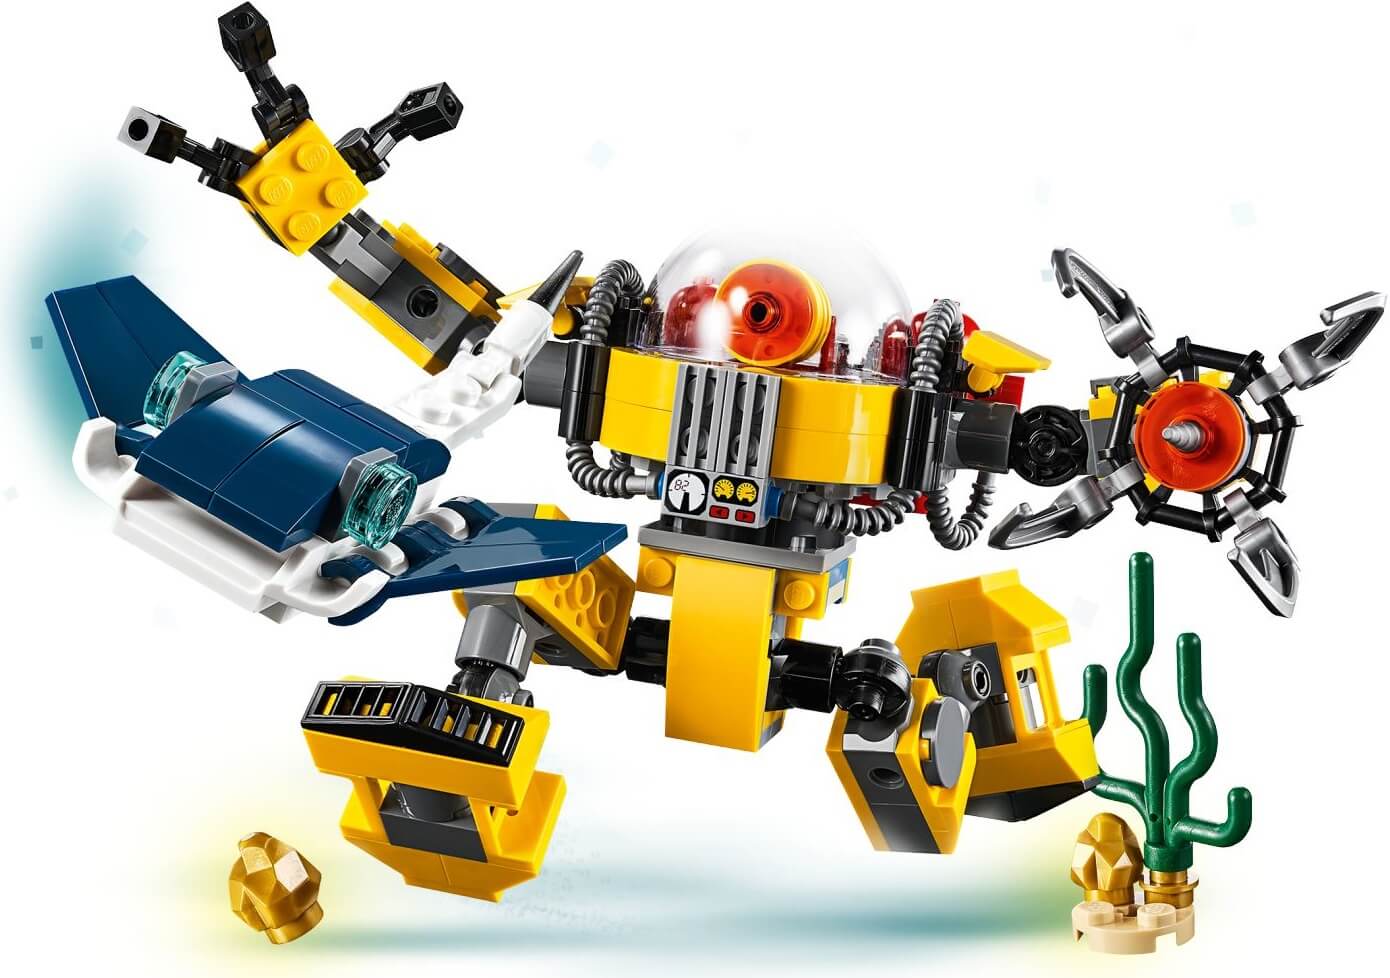 Robot submarino ( Lego 31090 ) imagen c